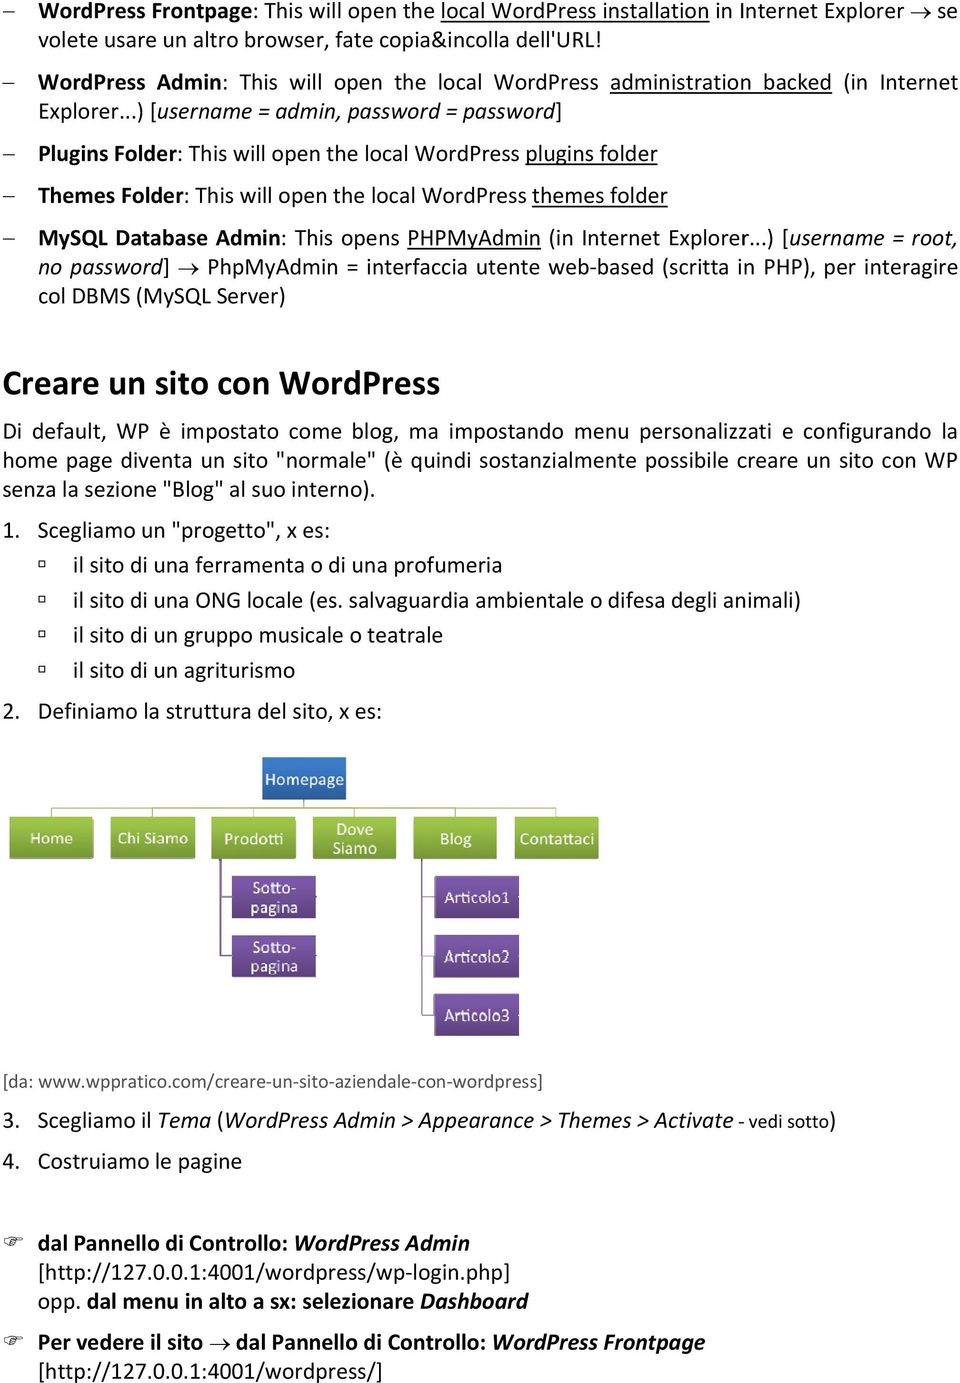 ..) [username = admin, password = password] Plugins Folder: This will open the local WordPress plugins folder Themes Folder: This will open the local WordPress themes folder MySQL Database Admin: